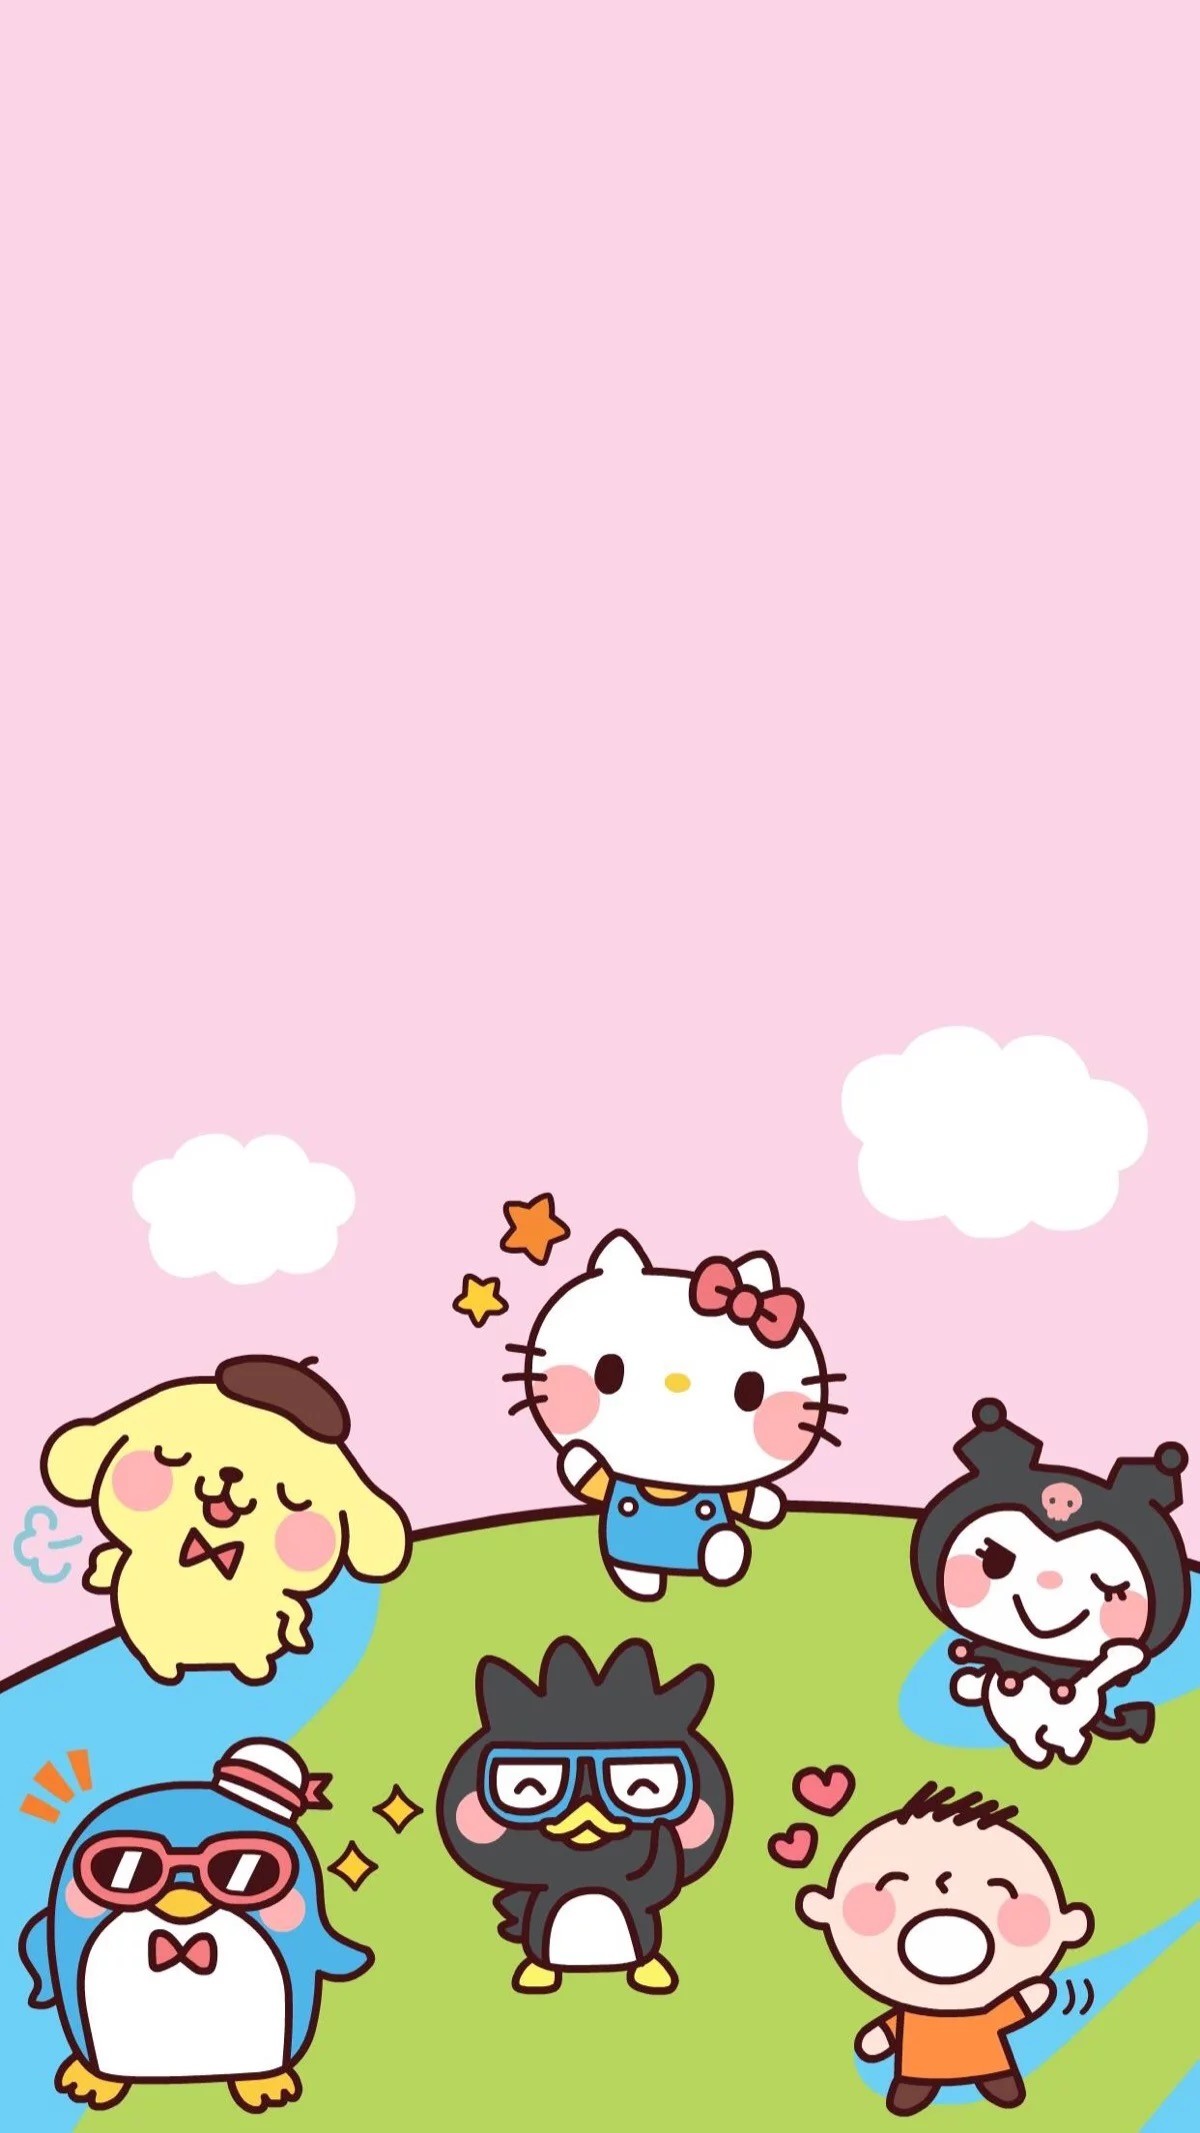 1200x2133 Sanrio Wallpaper, Kitty Wallpaper, Iphone Backgrounds, Wallpaper  Backgrounds, Iphone Wallpapers, Hello Kitty Parties, Hello Kitty Pics,  Sanrio Characters, ...